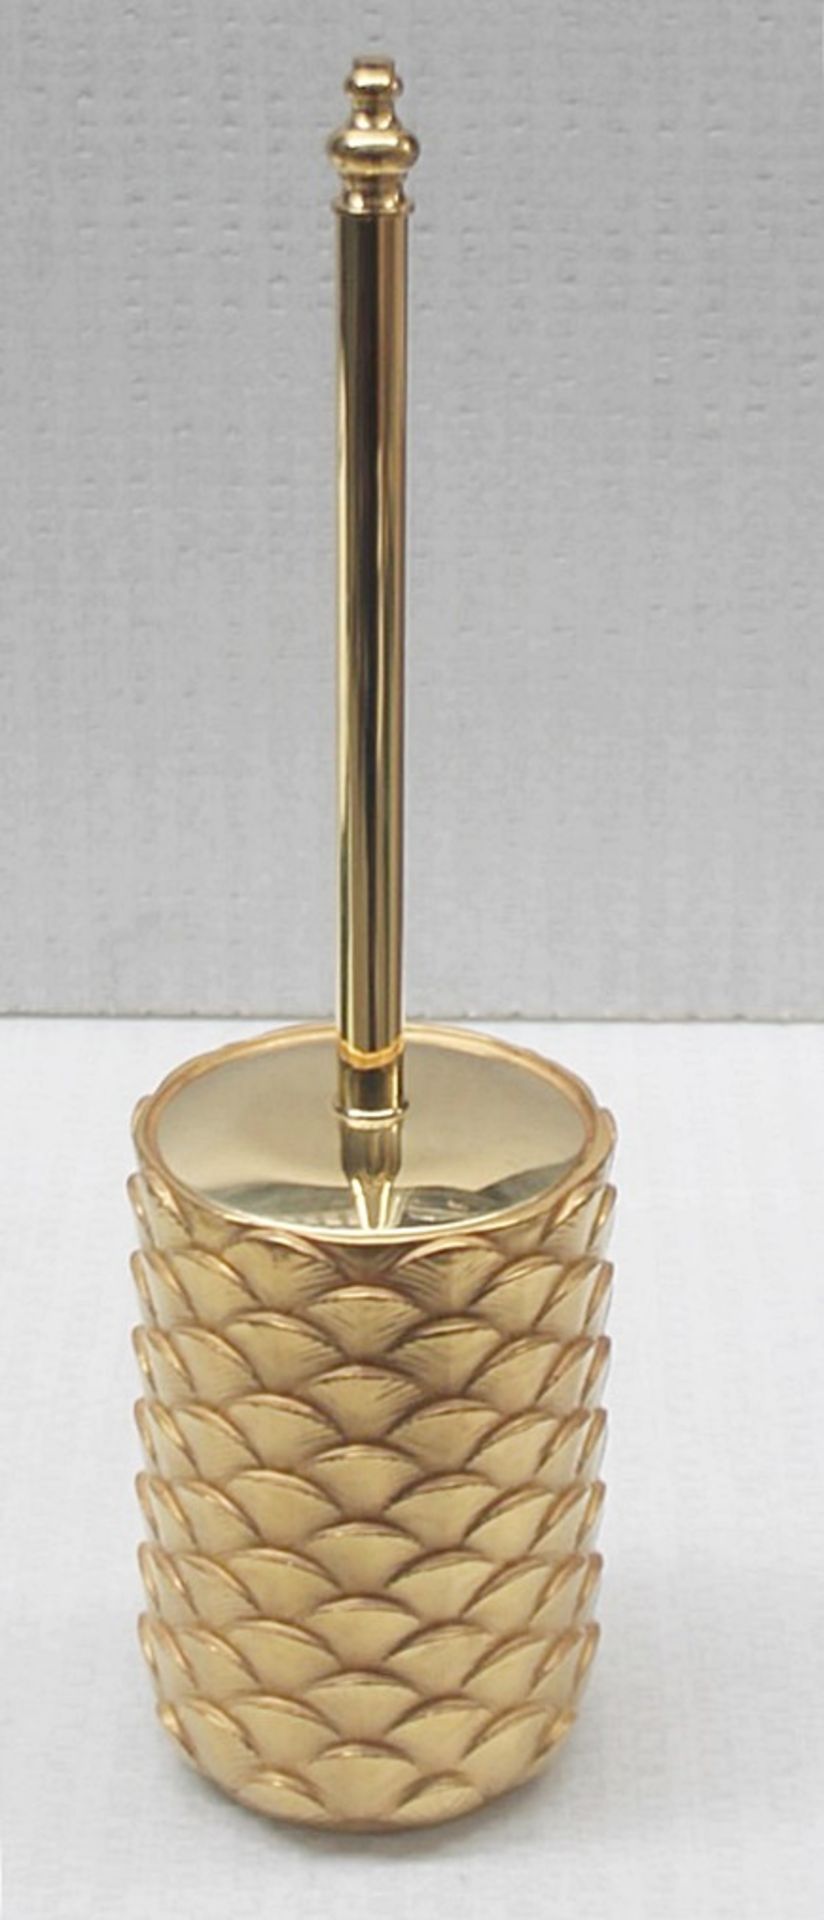 1 x VILLARI 'Peacock' Opulent 24-karat Gold Decorated Porcelain Toilet Brush Holder - RRP £459.00 - Image 3 of 9